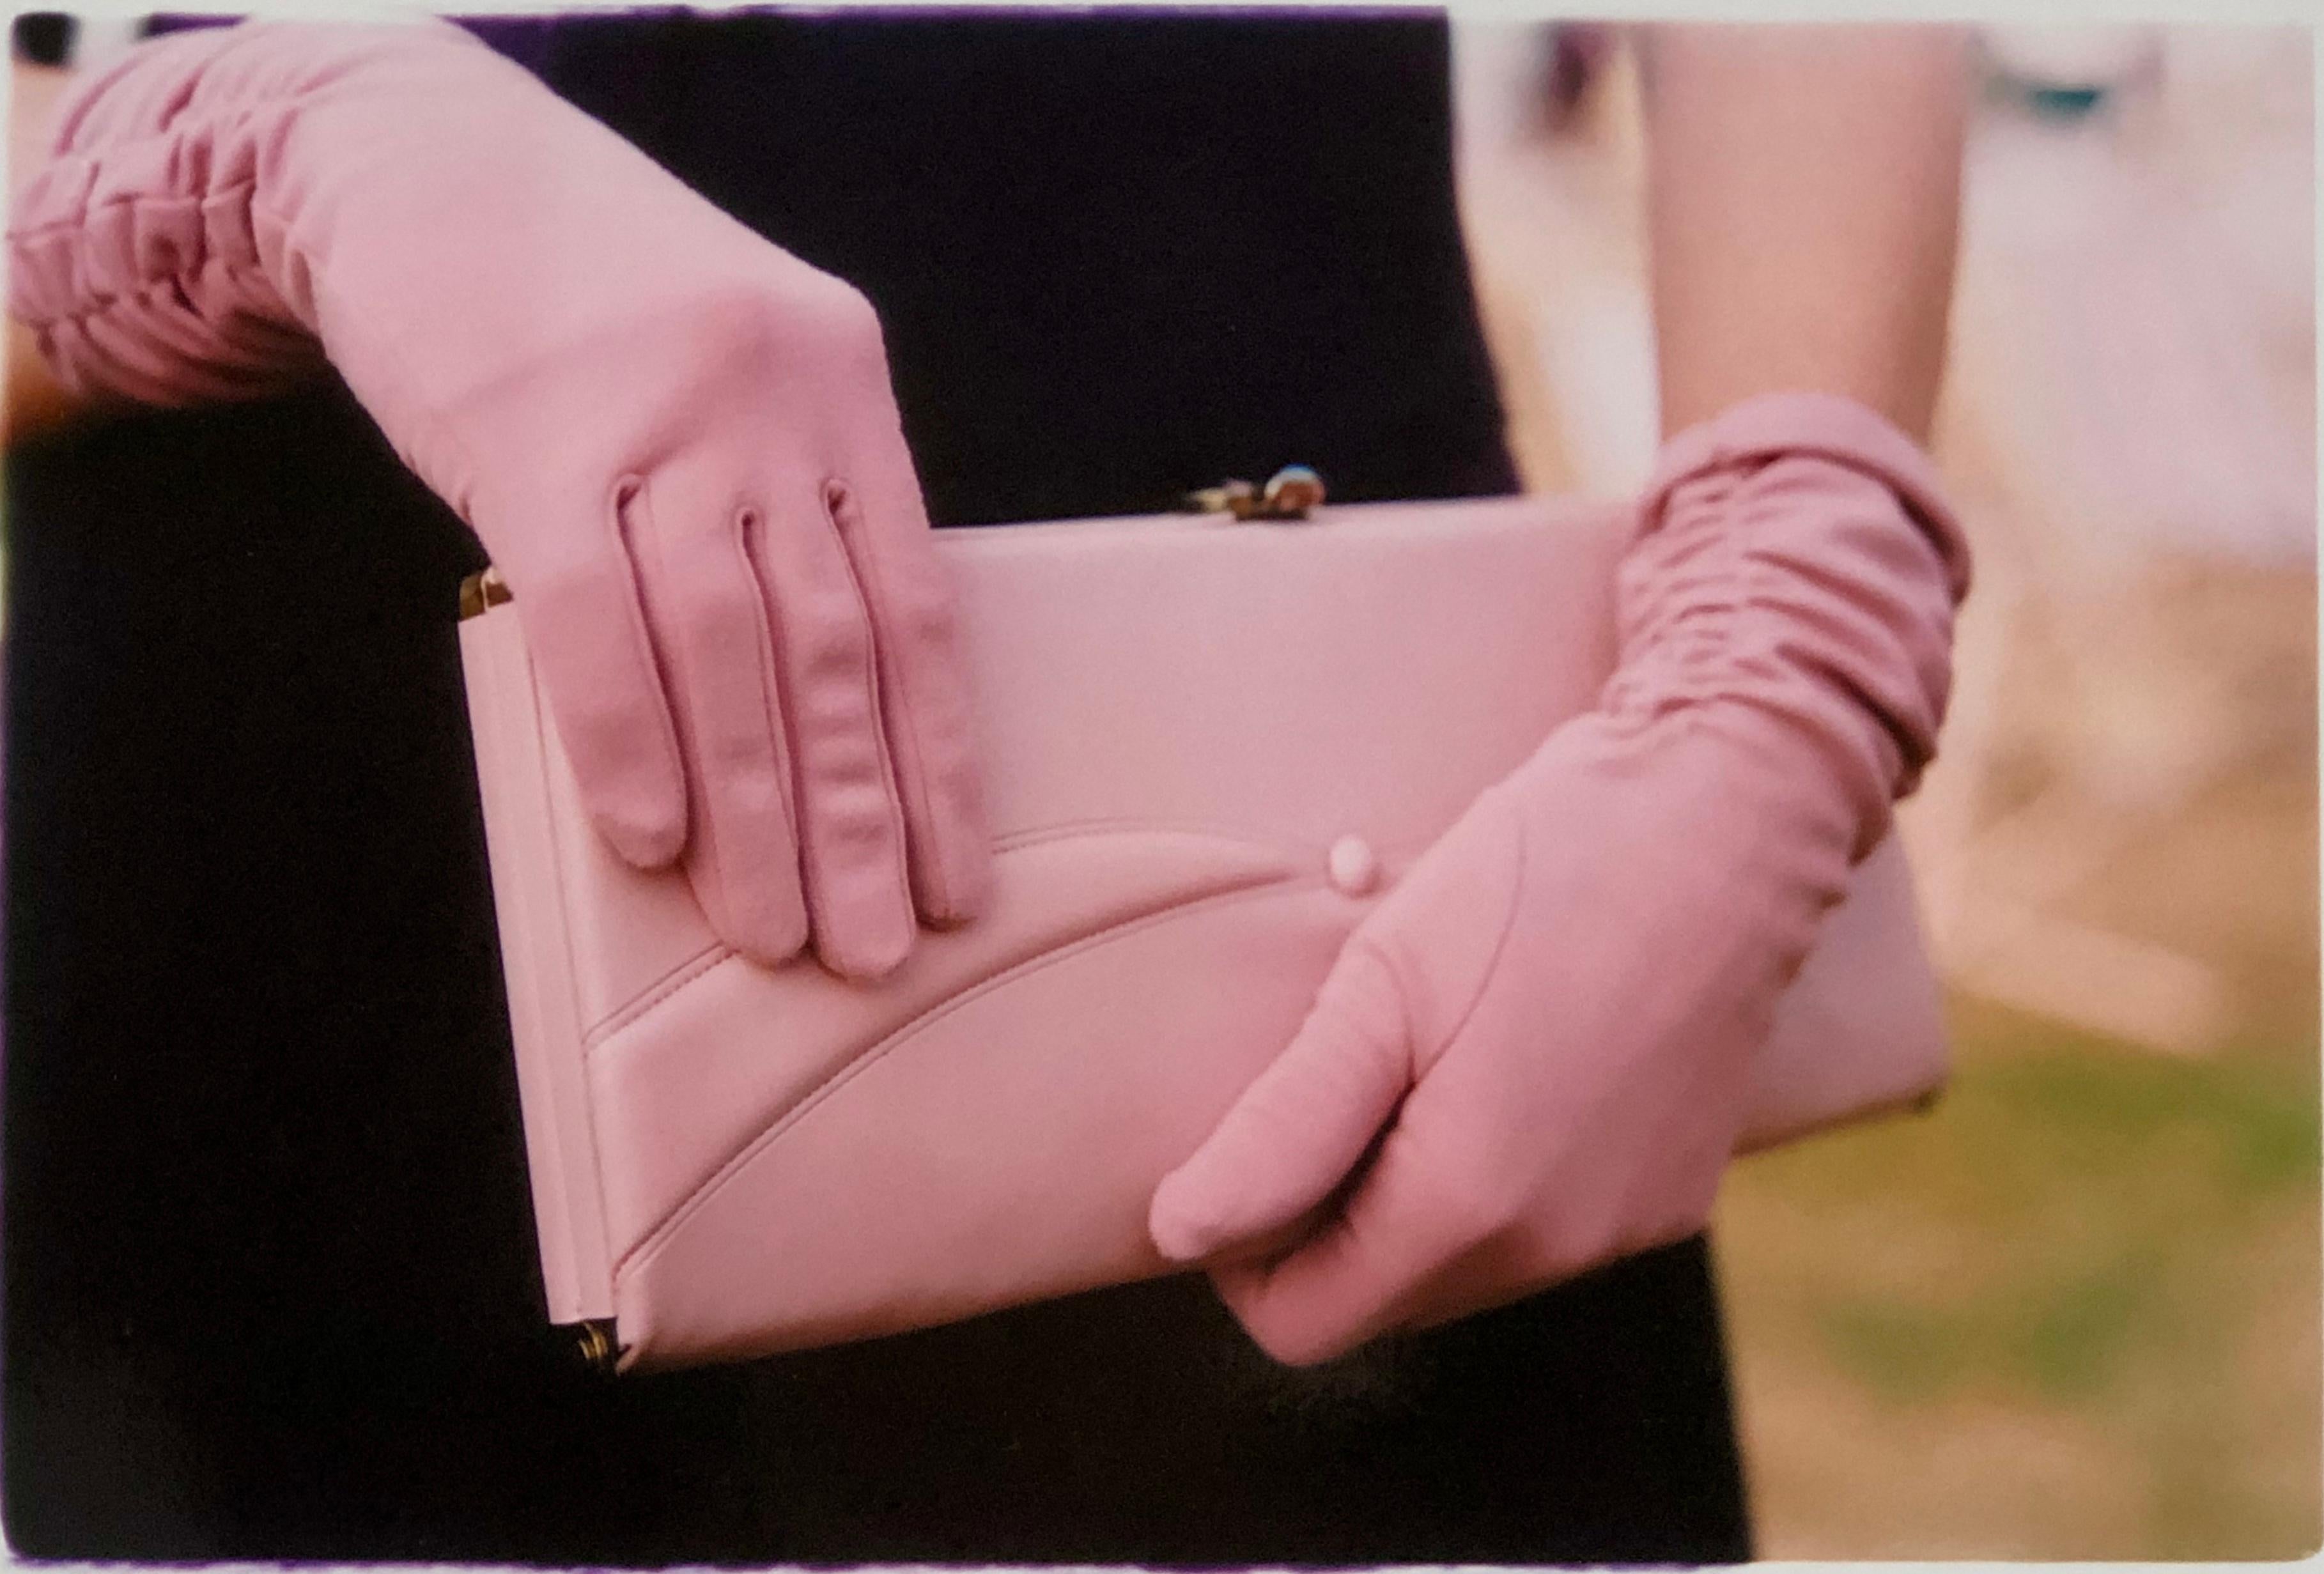 Richard Heeps Figurative Photograph – Rosa Handschuhe, Goodwood, Chichester - Feminine Mode, Farbfotografie